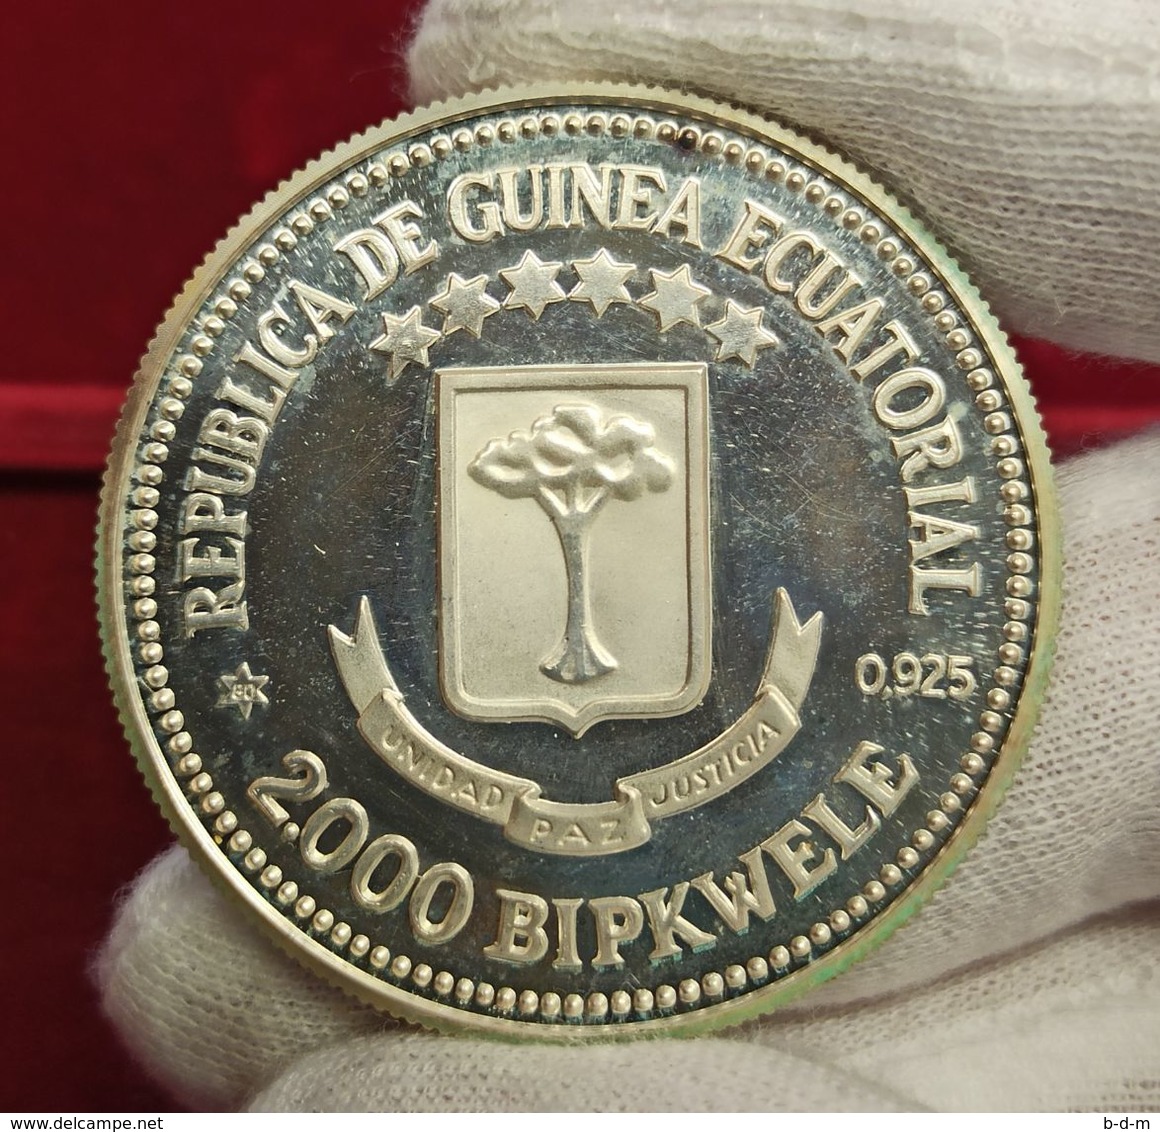 Guinea Ecuatorial 2000 Bipkwele Visita De Los Reyes 1979 X# 2 Plata Proof - Equatoriaal Guinea